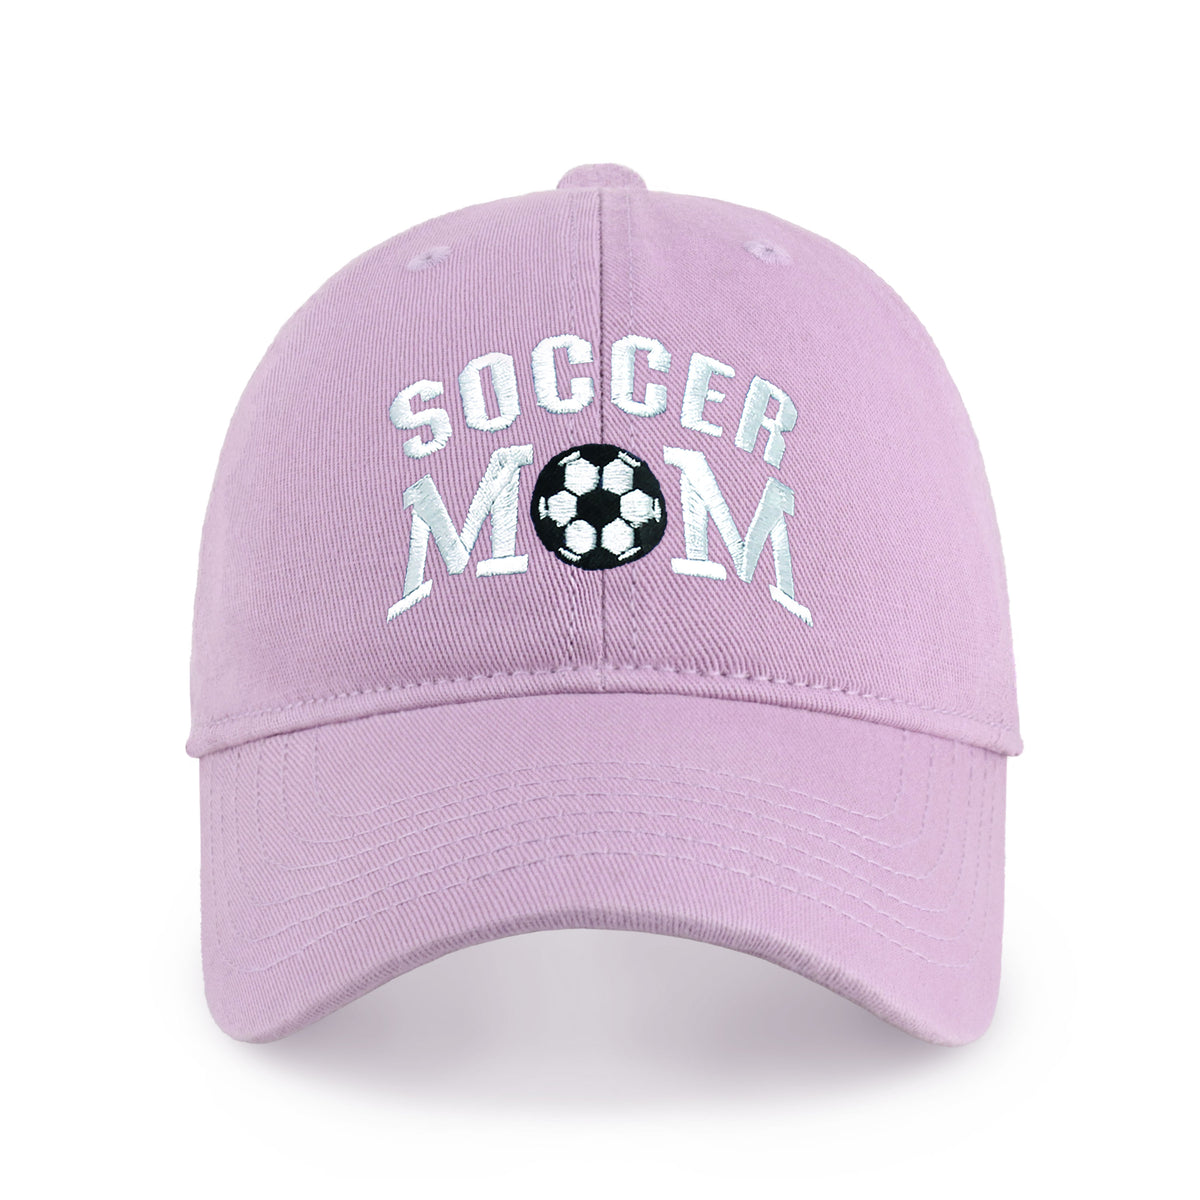 Soccer Mom Design Embroidered Cap